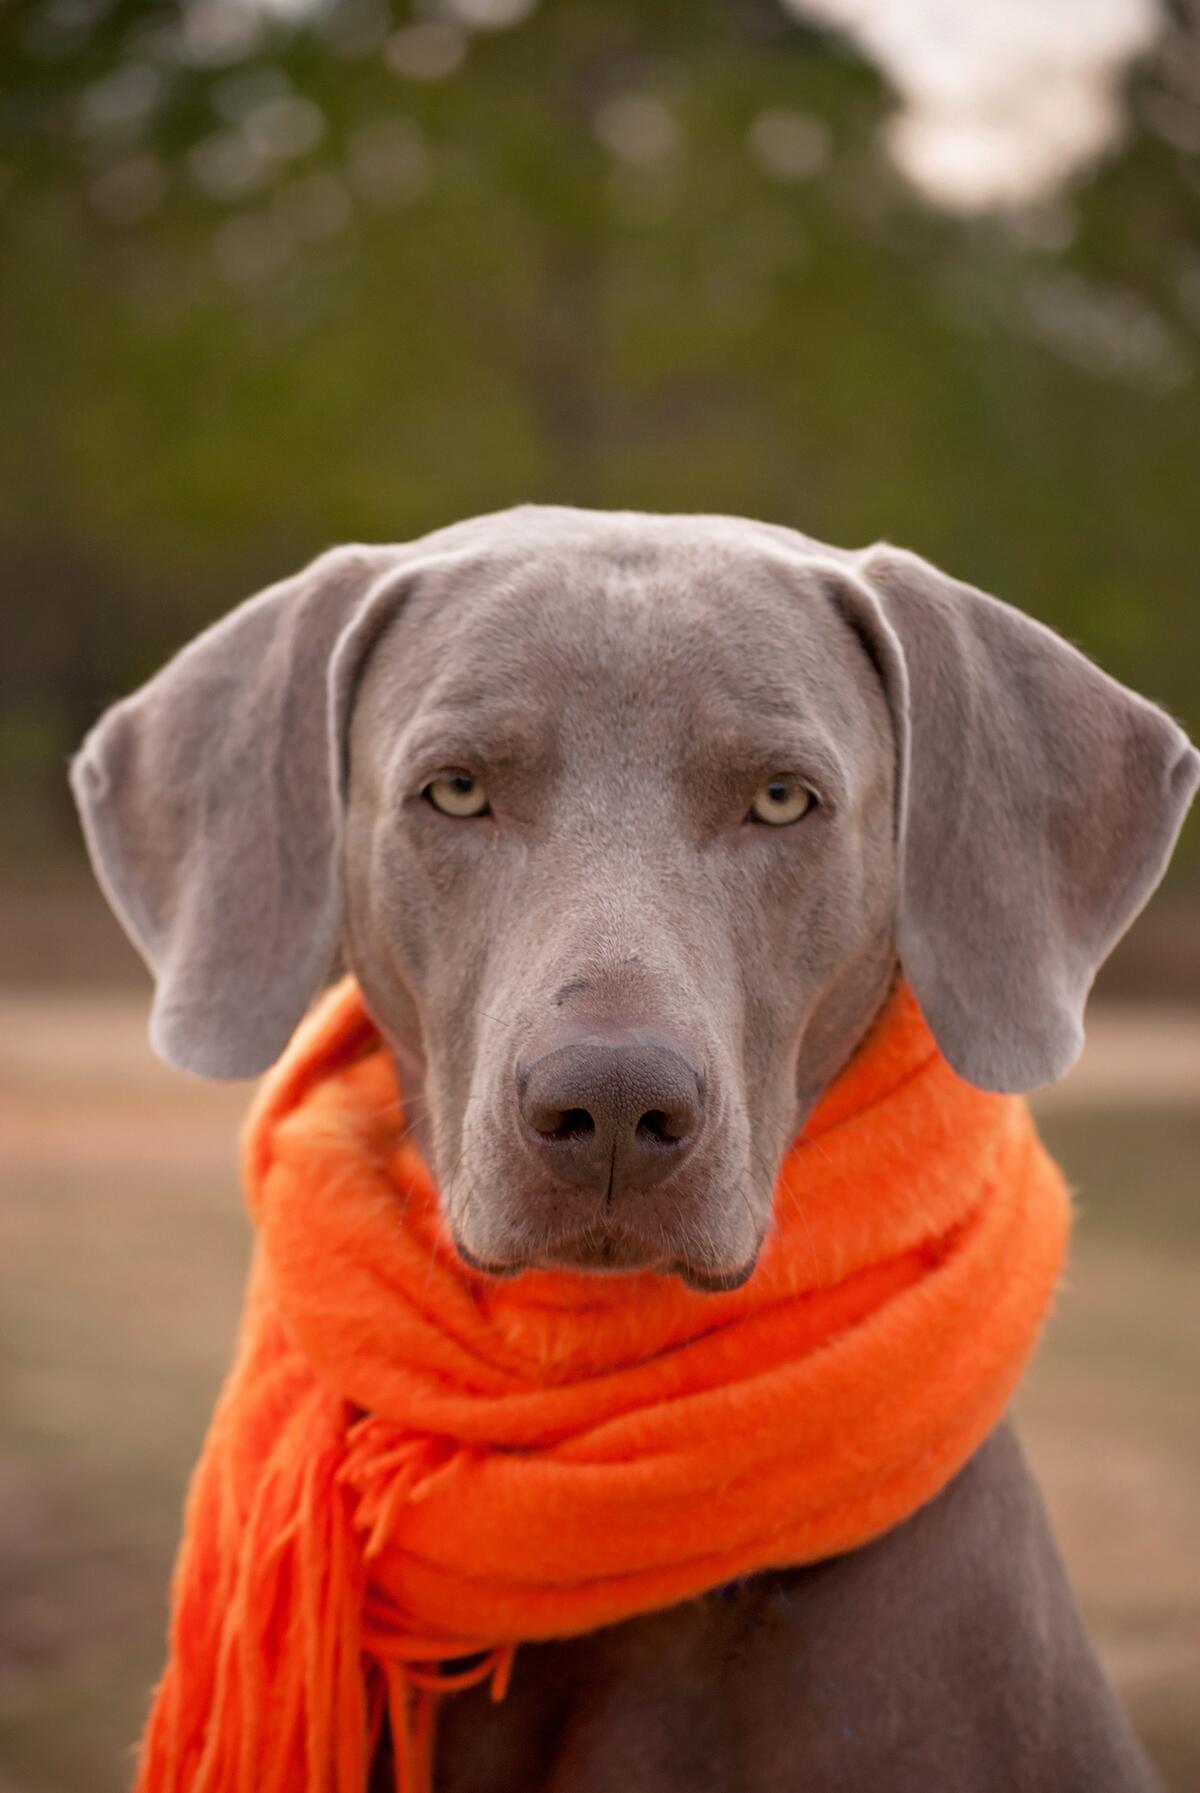 A lop-eared dog in an orange scarf.